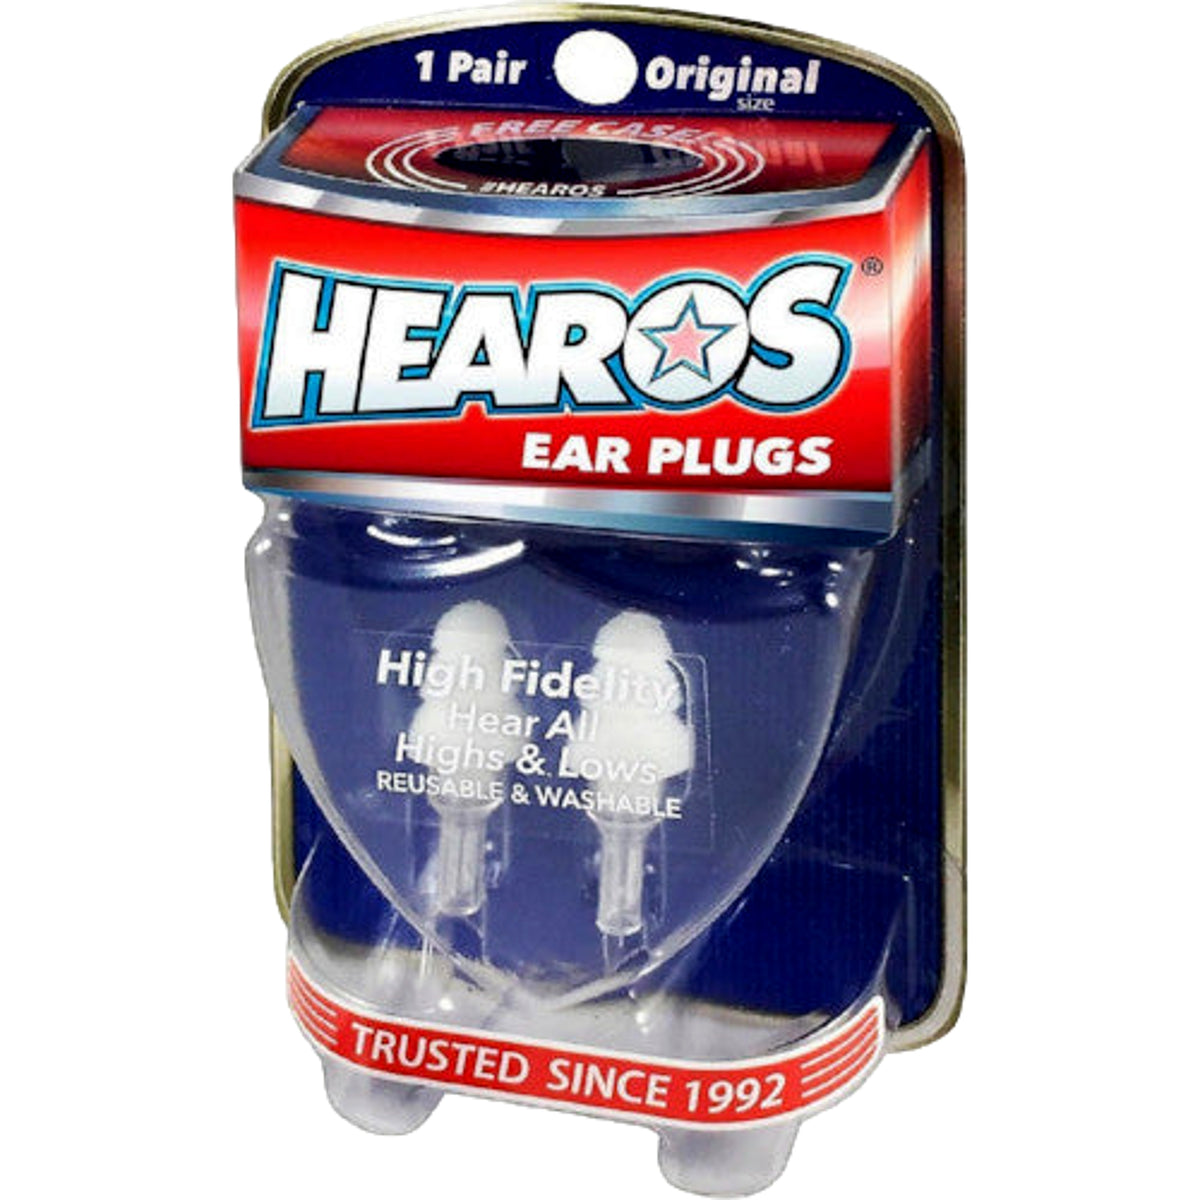 HEAROS High Fidelity Ear Plugs - 1 pair